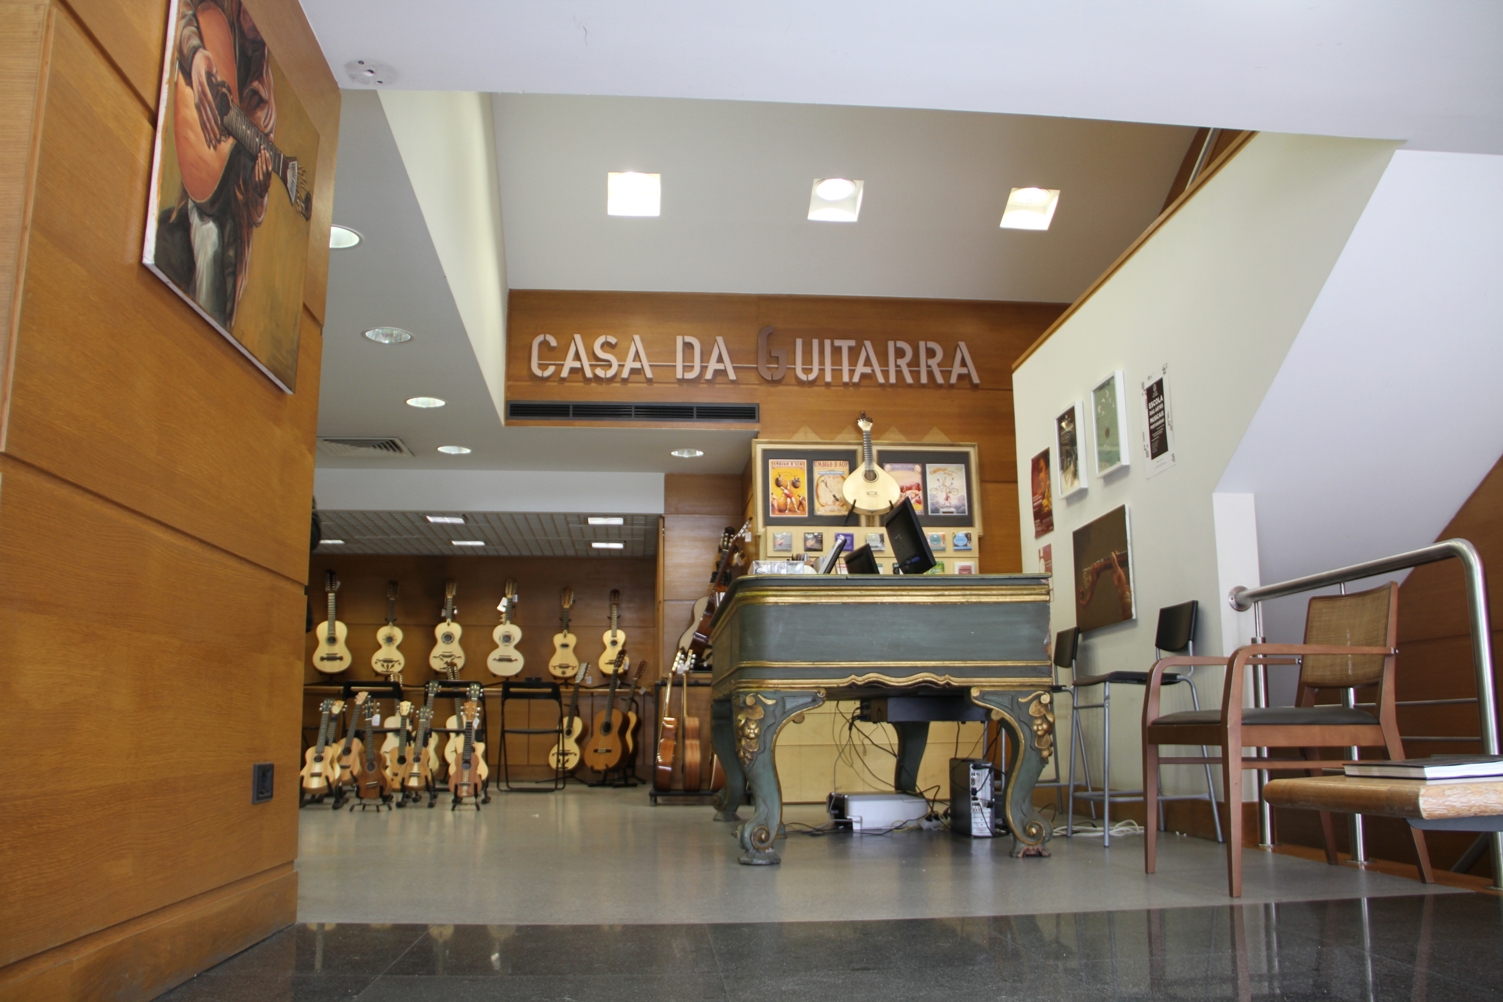 Casa da Guitarra -Music shop - Shops